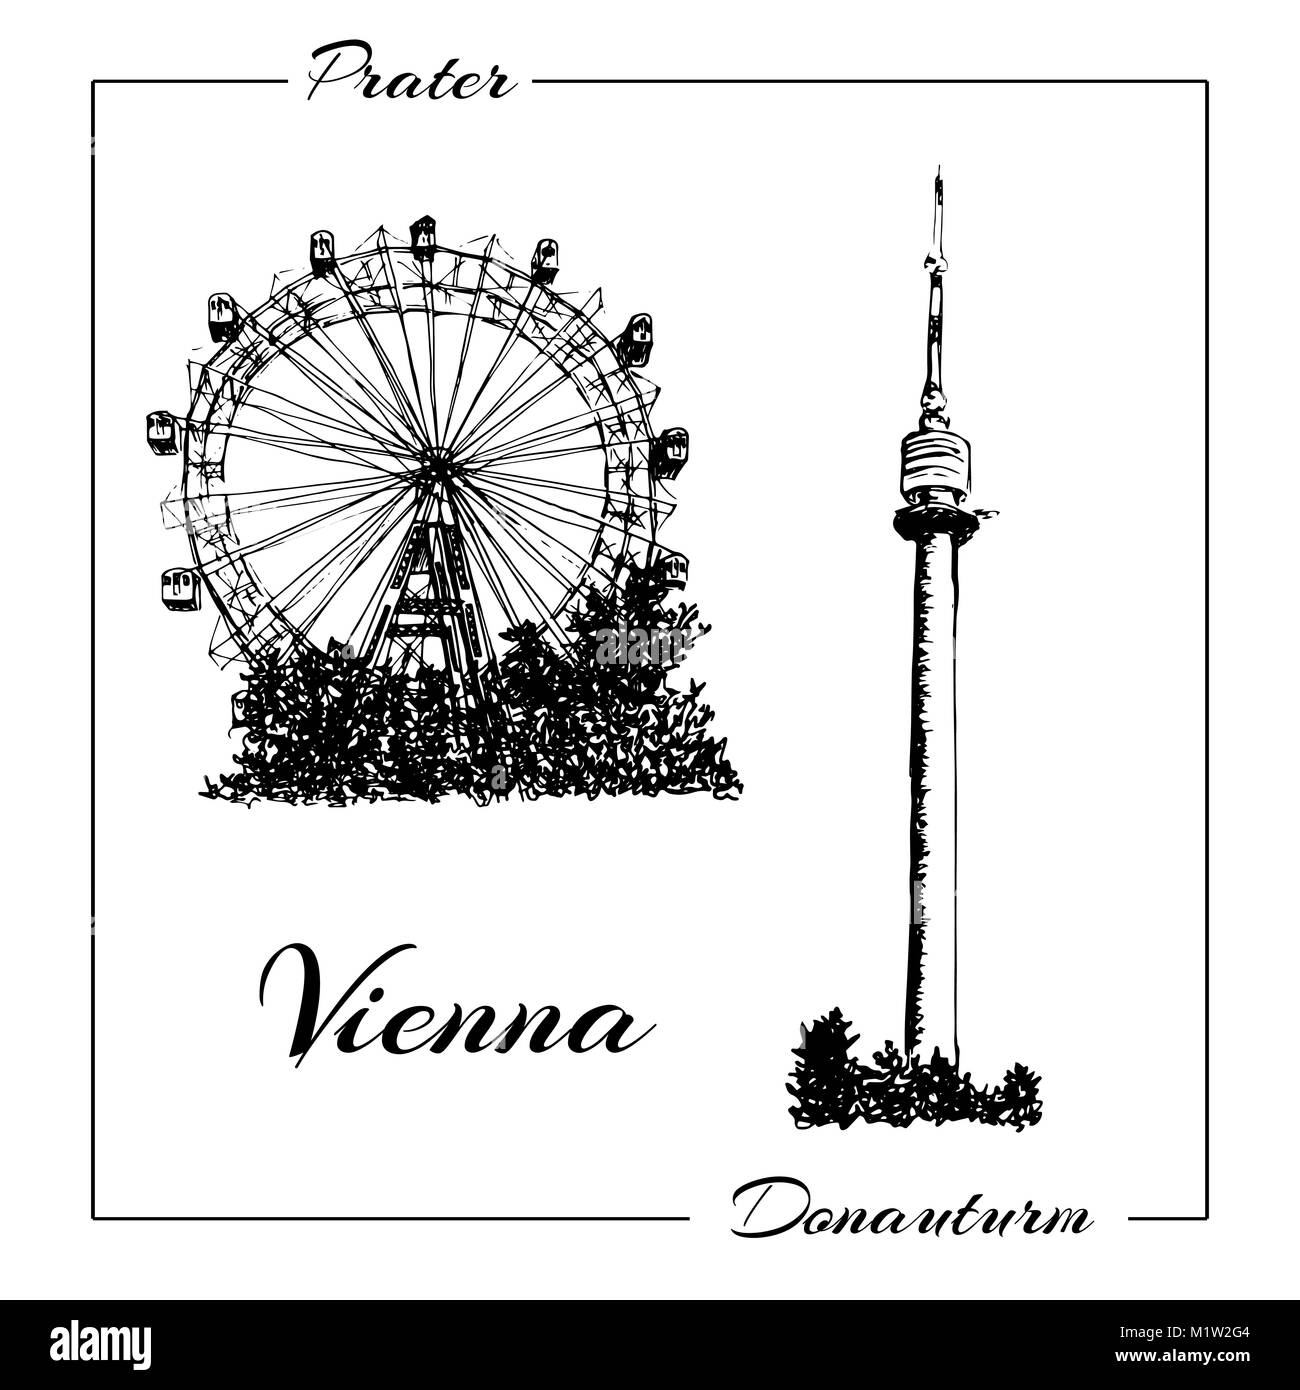 Vienna symbol. Vector hand drawn ink pen sketch illustration. Donauturm, Prater Stock Vector